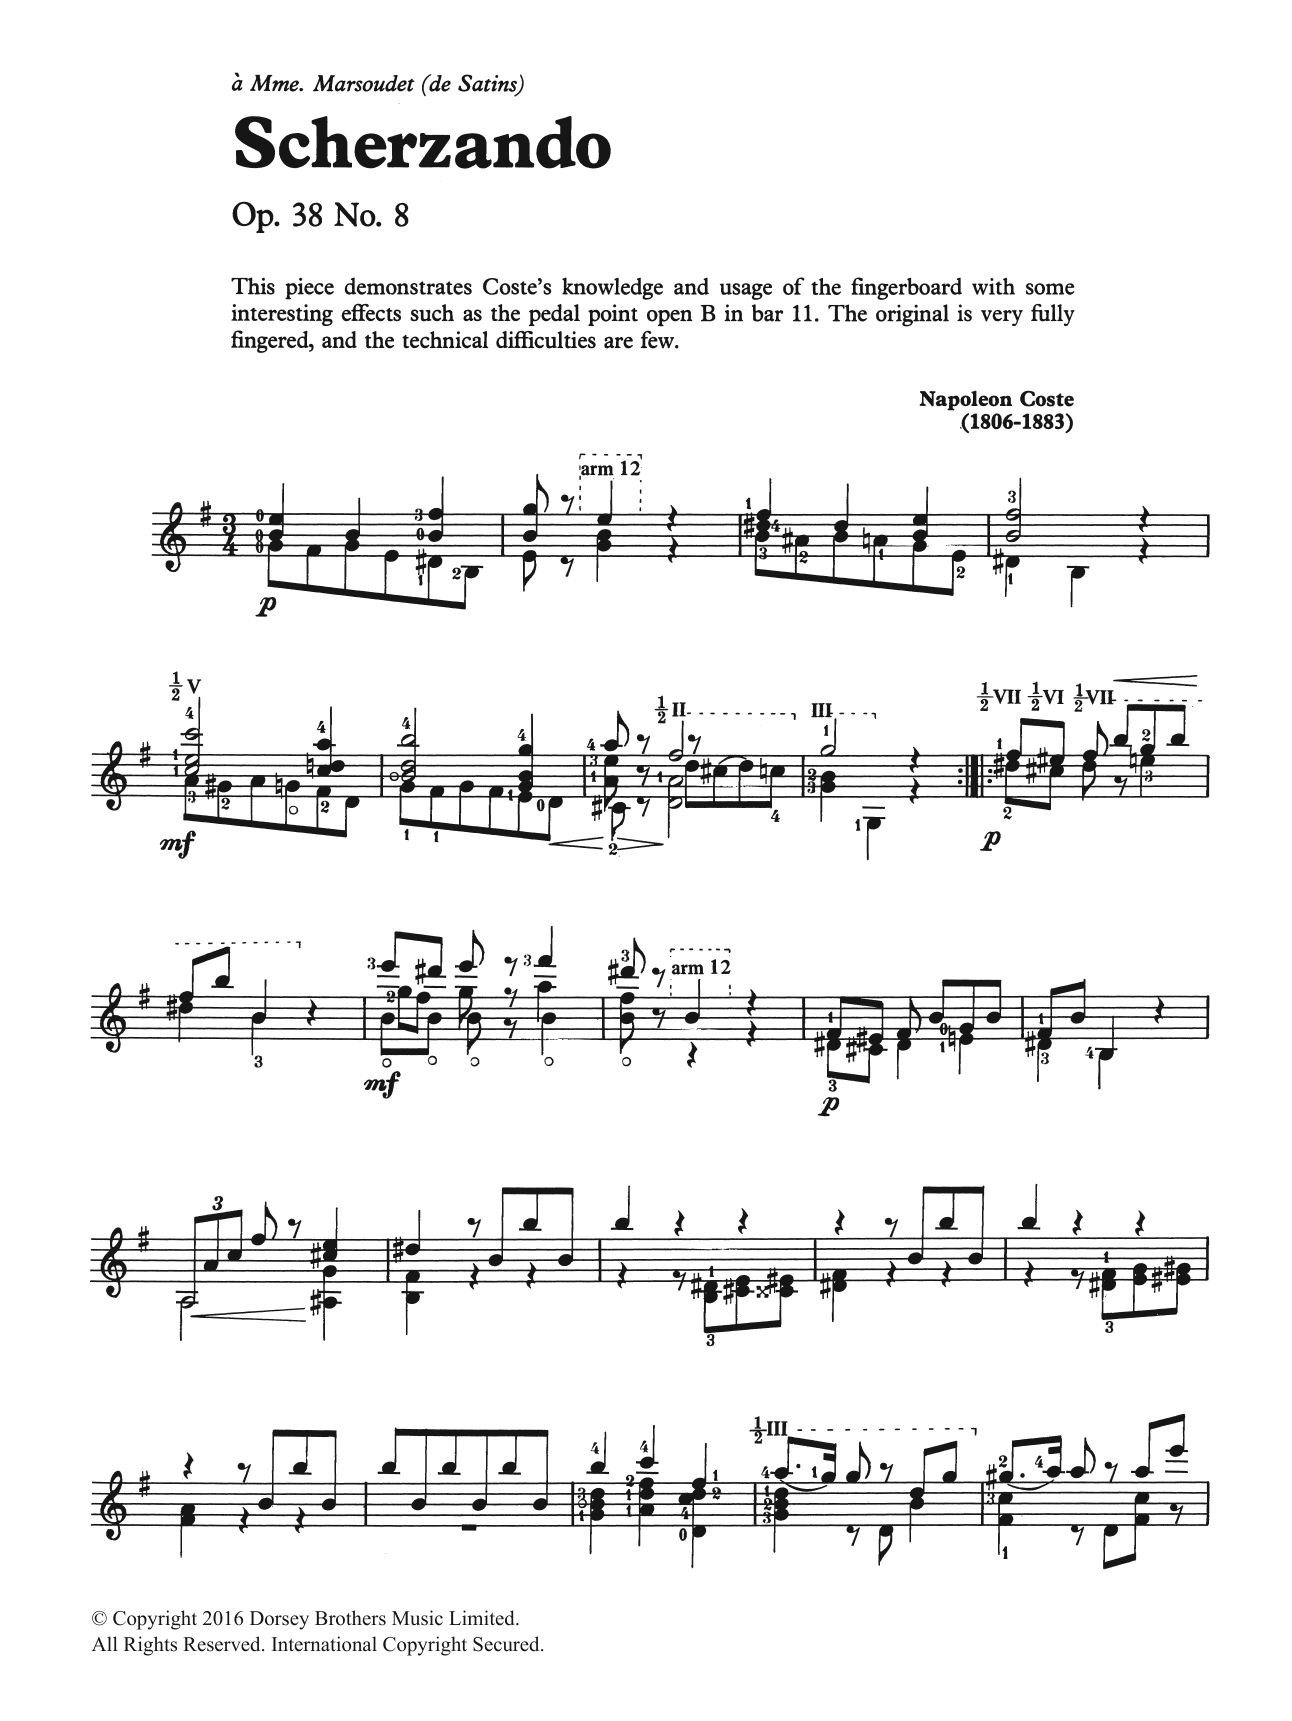 Napoleon Coste Scherzando Sheet Music Notes & Chords for Guitar - Download or Print PDF